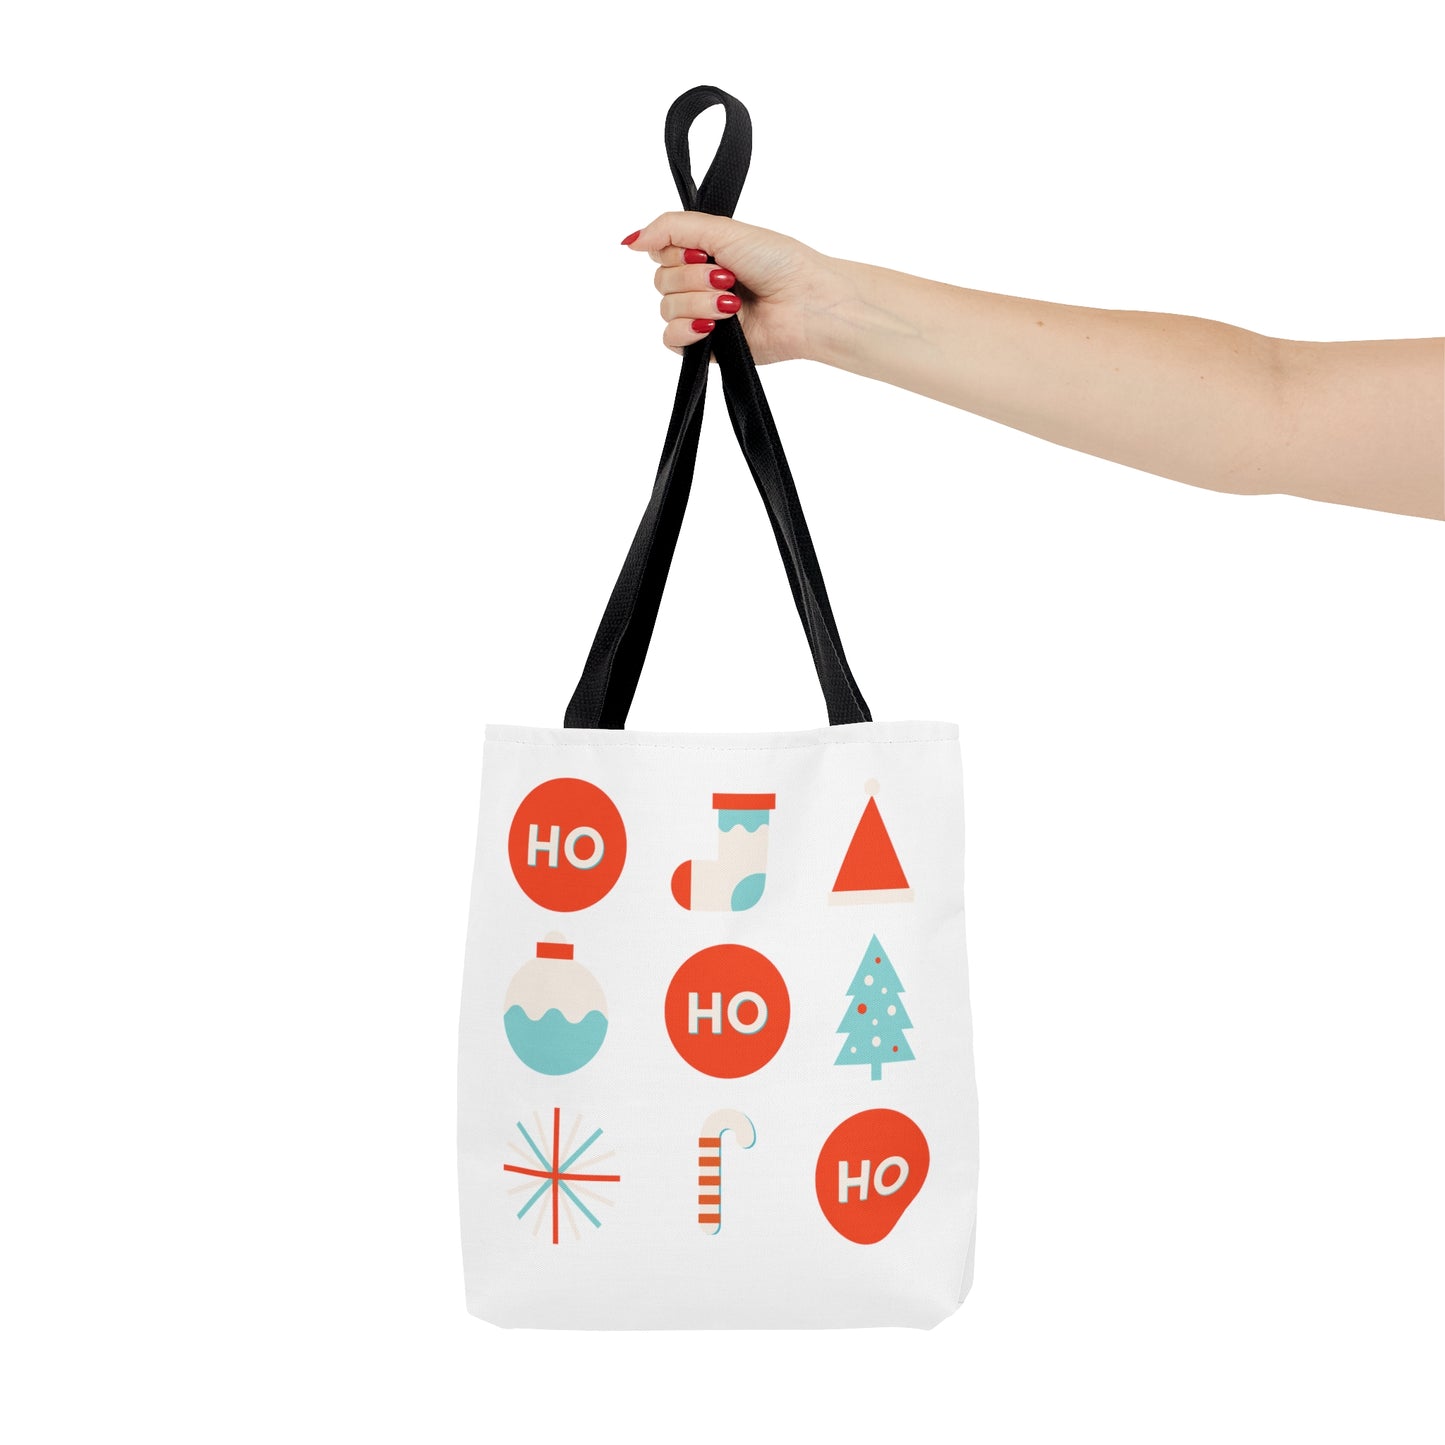 Merry Christmas Tote Bags, Reusable Tote Bags with Ho Ho Printed